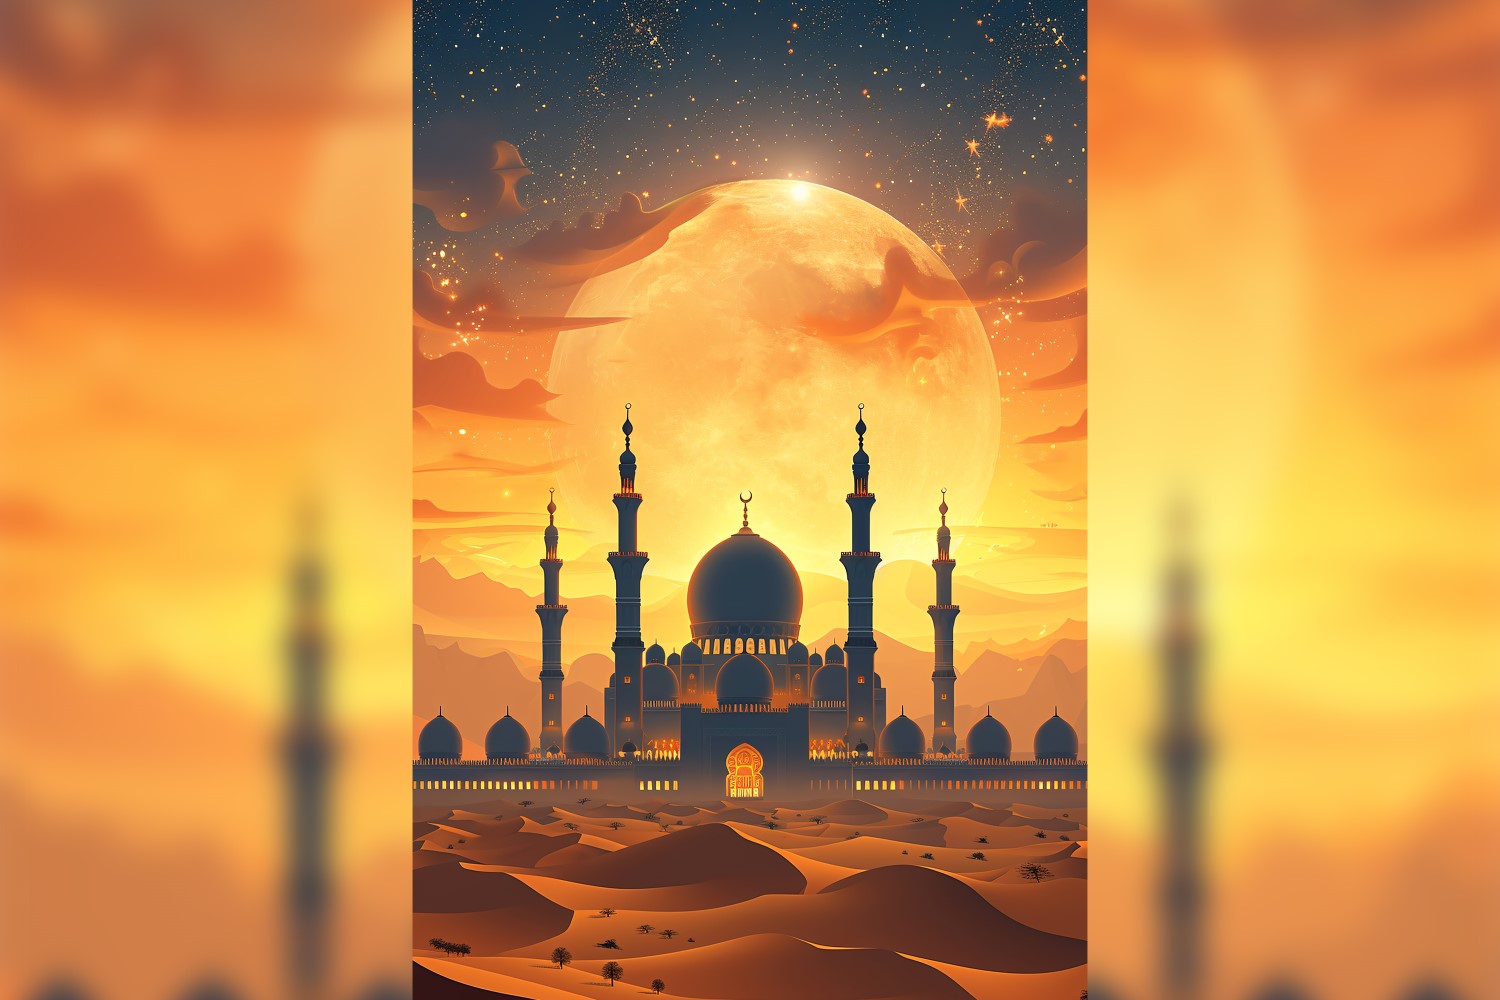 Ramadan Kareem greeting card poster design with mosque & moon and desert